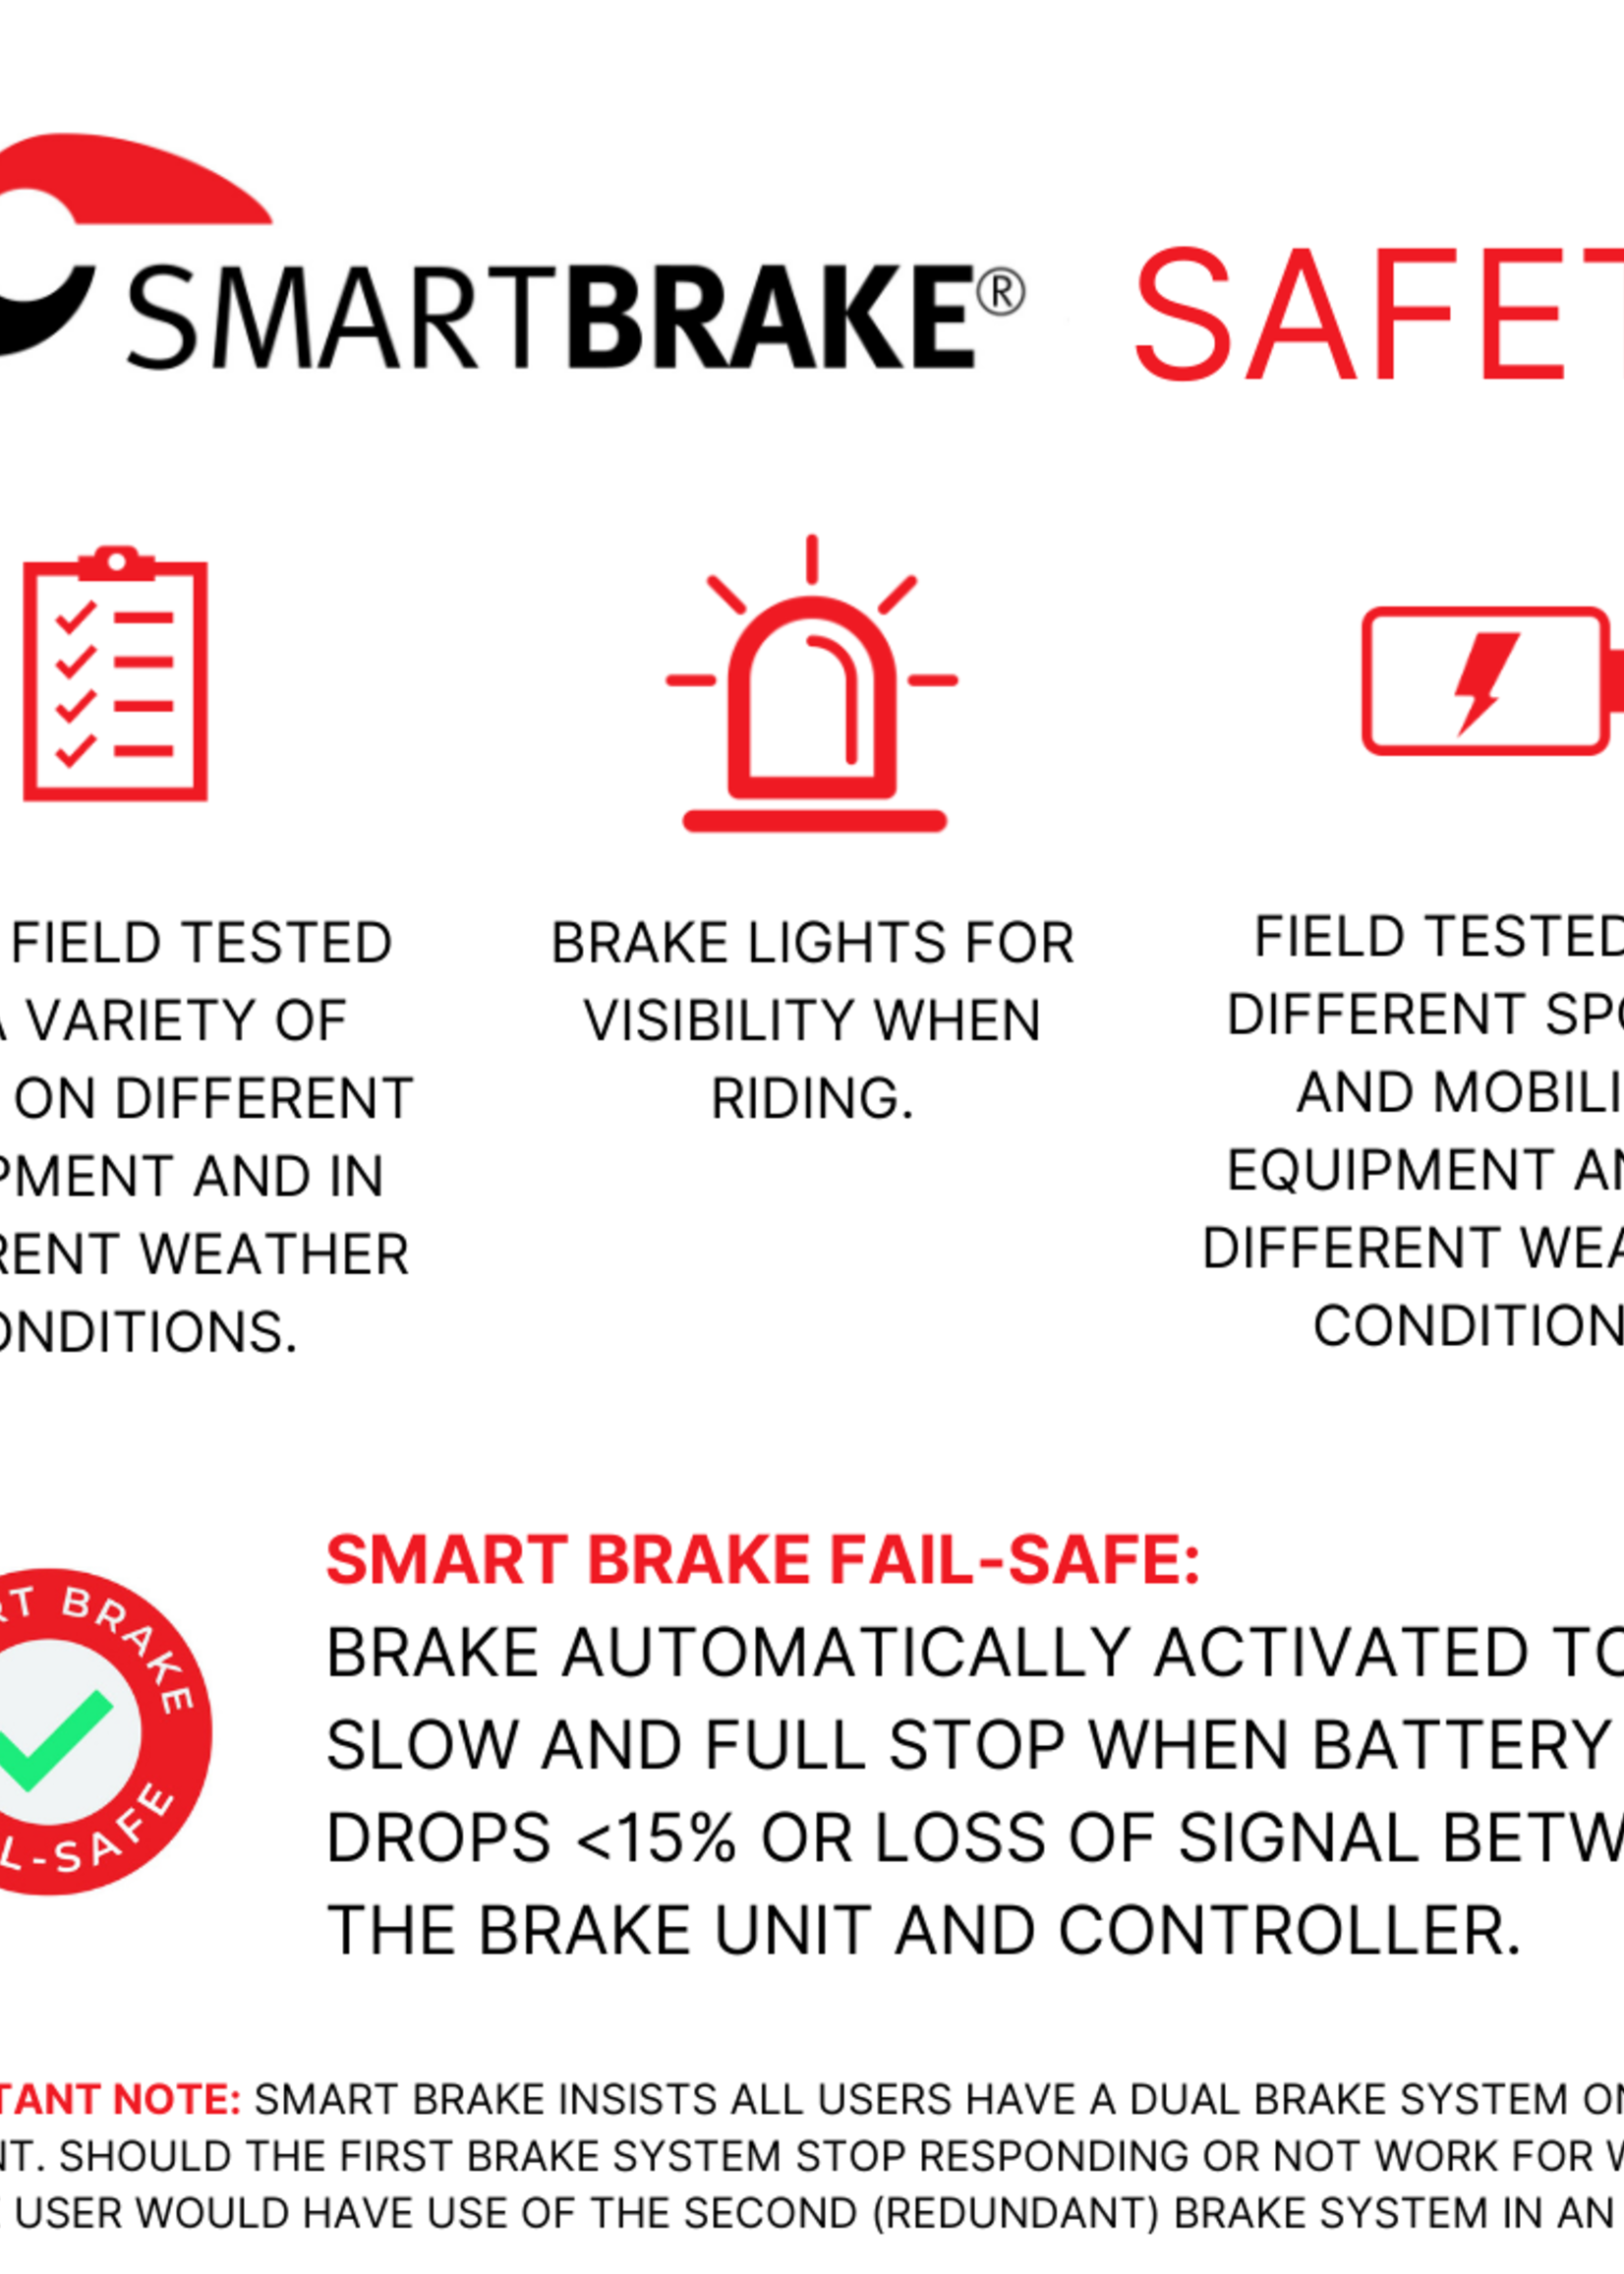 Smart Brake Smart Brake 1x1 Kit: Twin Disc + Brake Lever